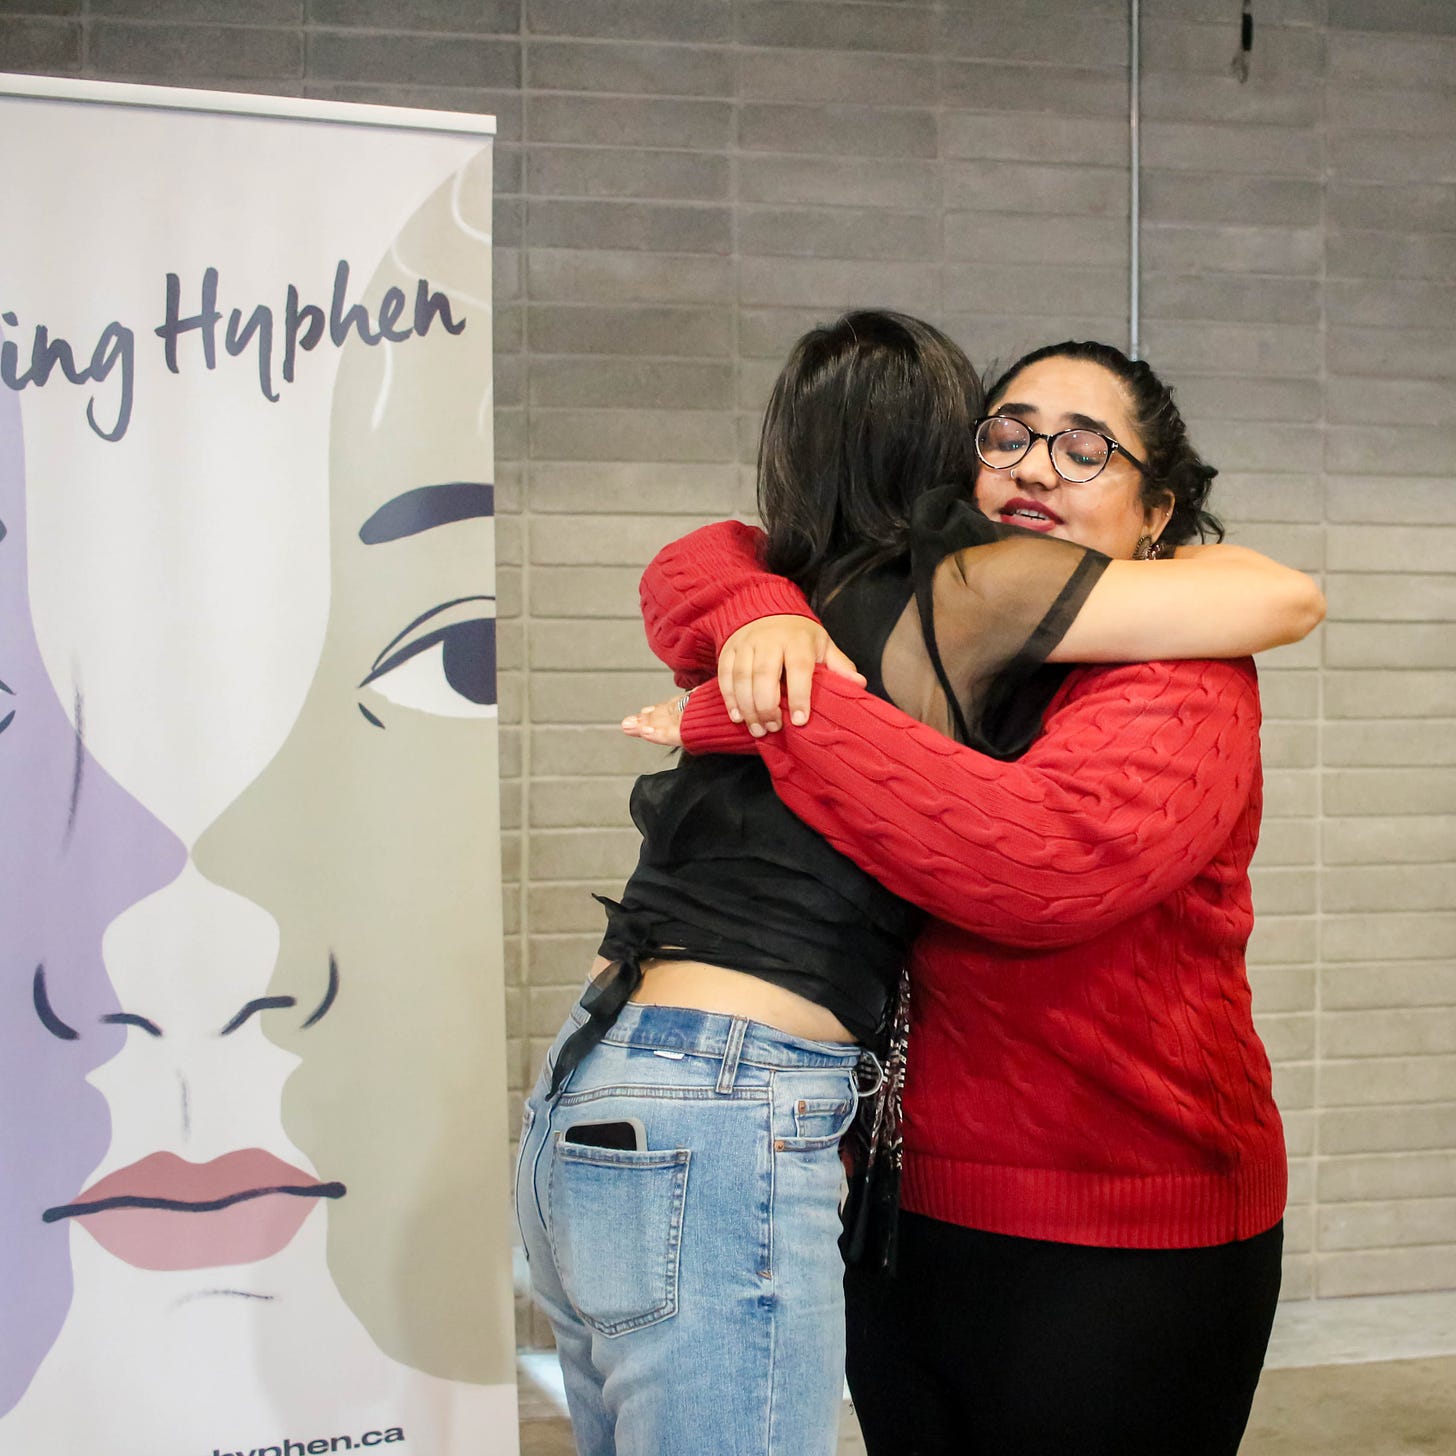 Justine hugging slam poet Khushu